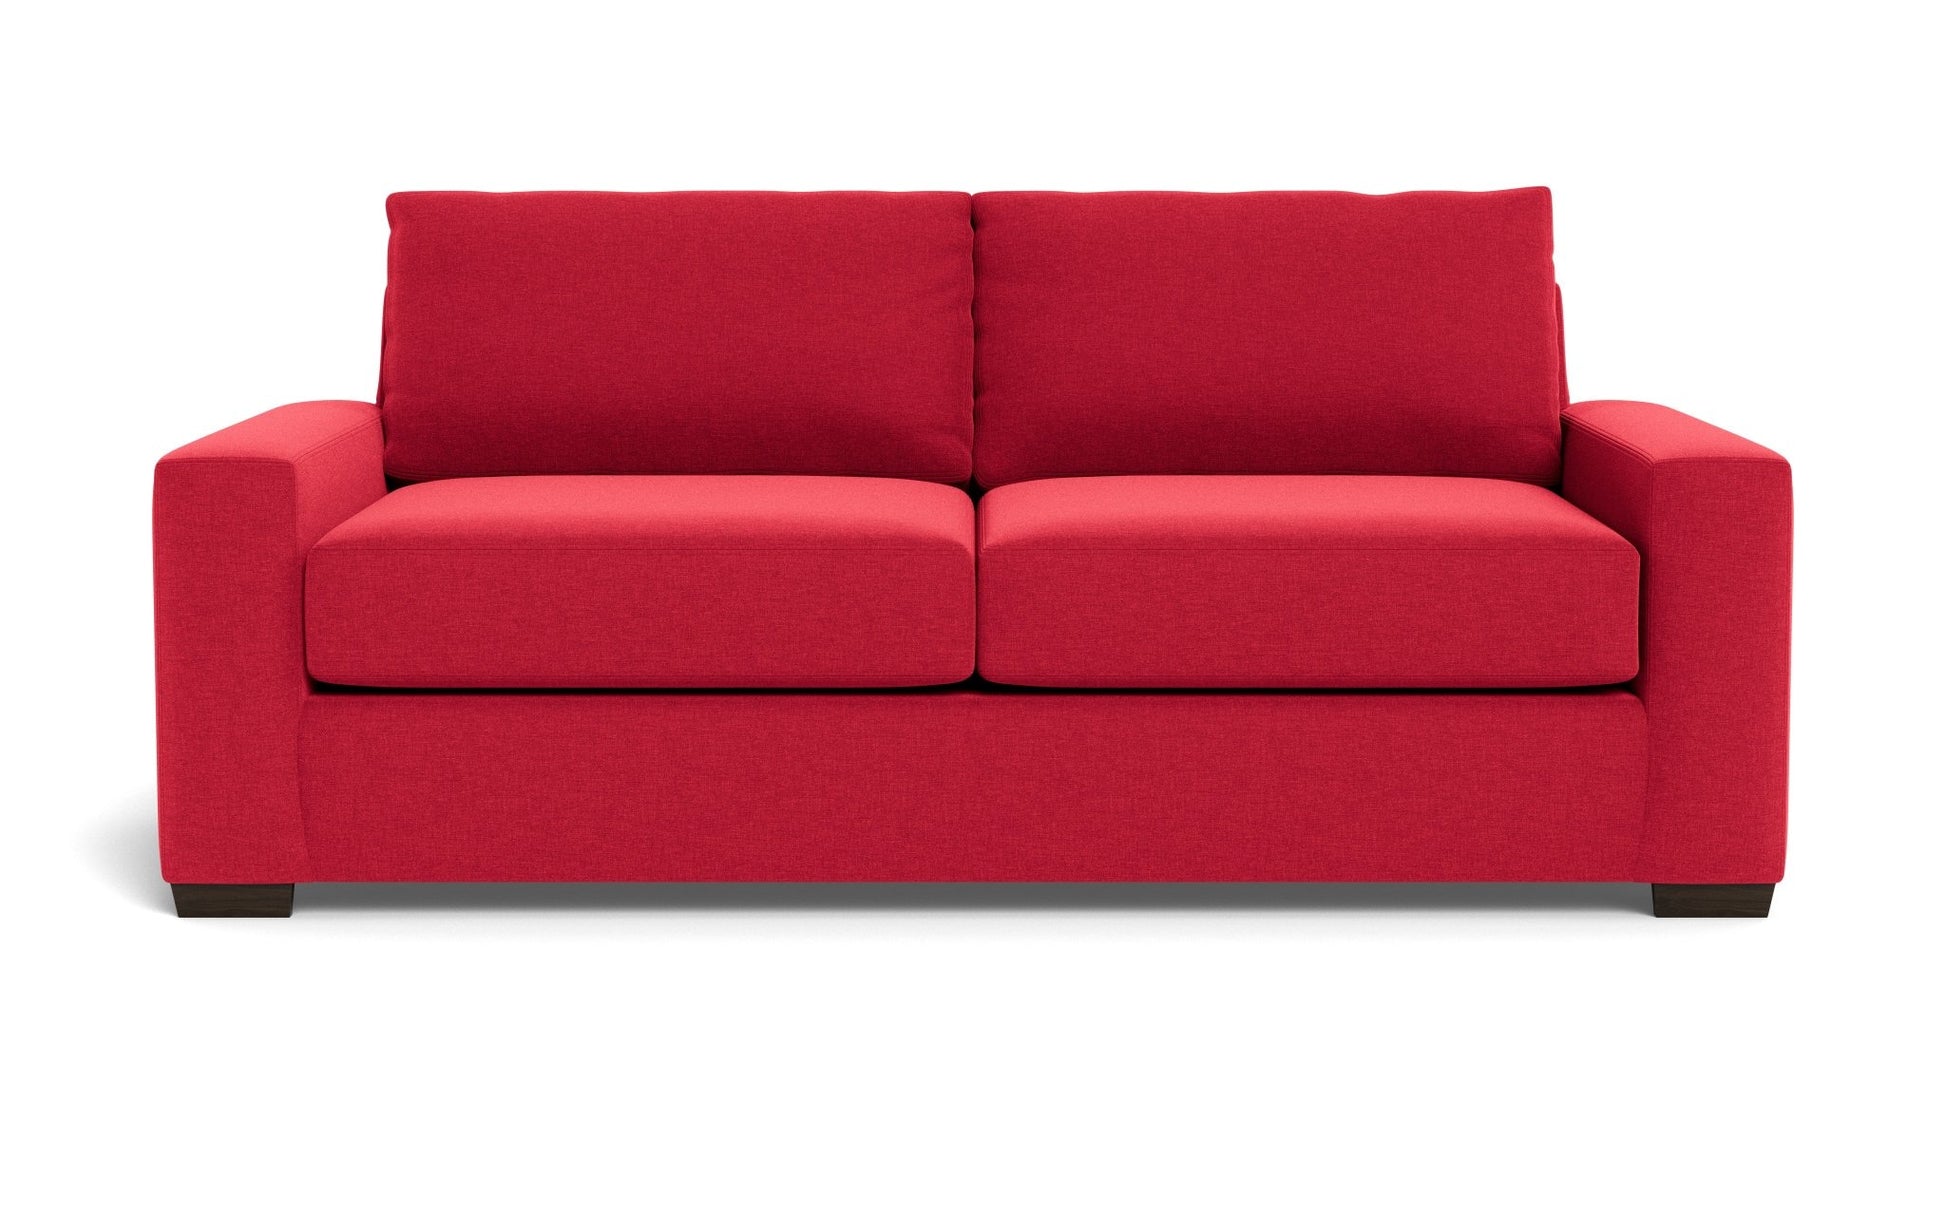 Mas Mesa Sofa - Bennett Red